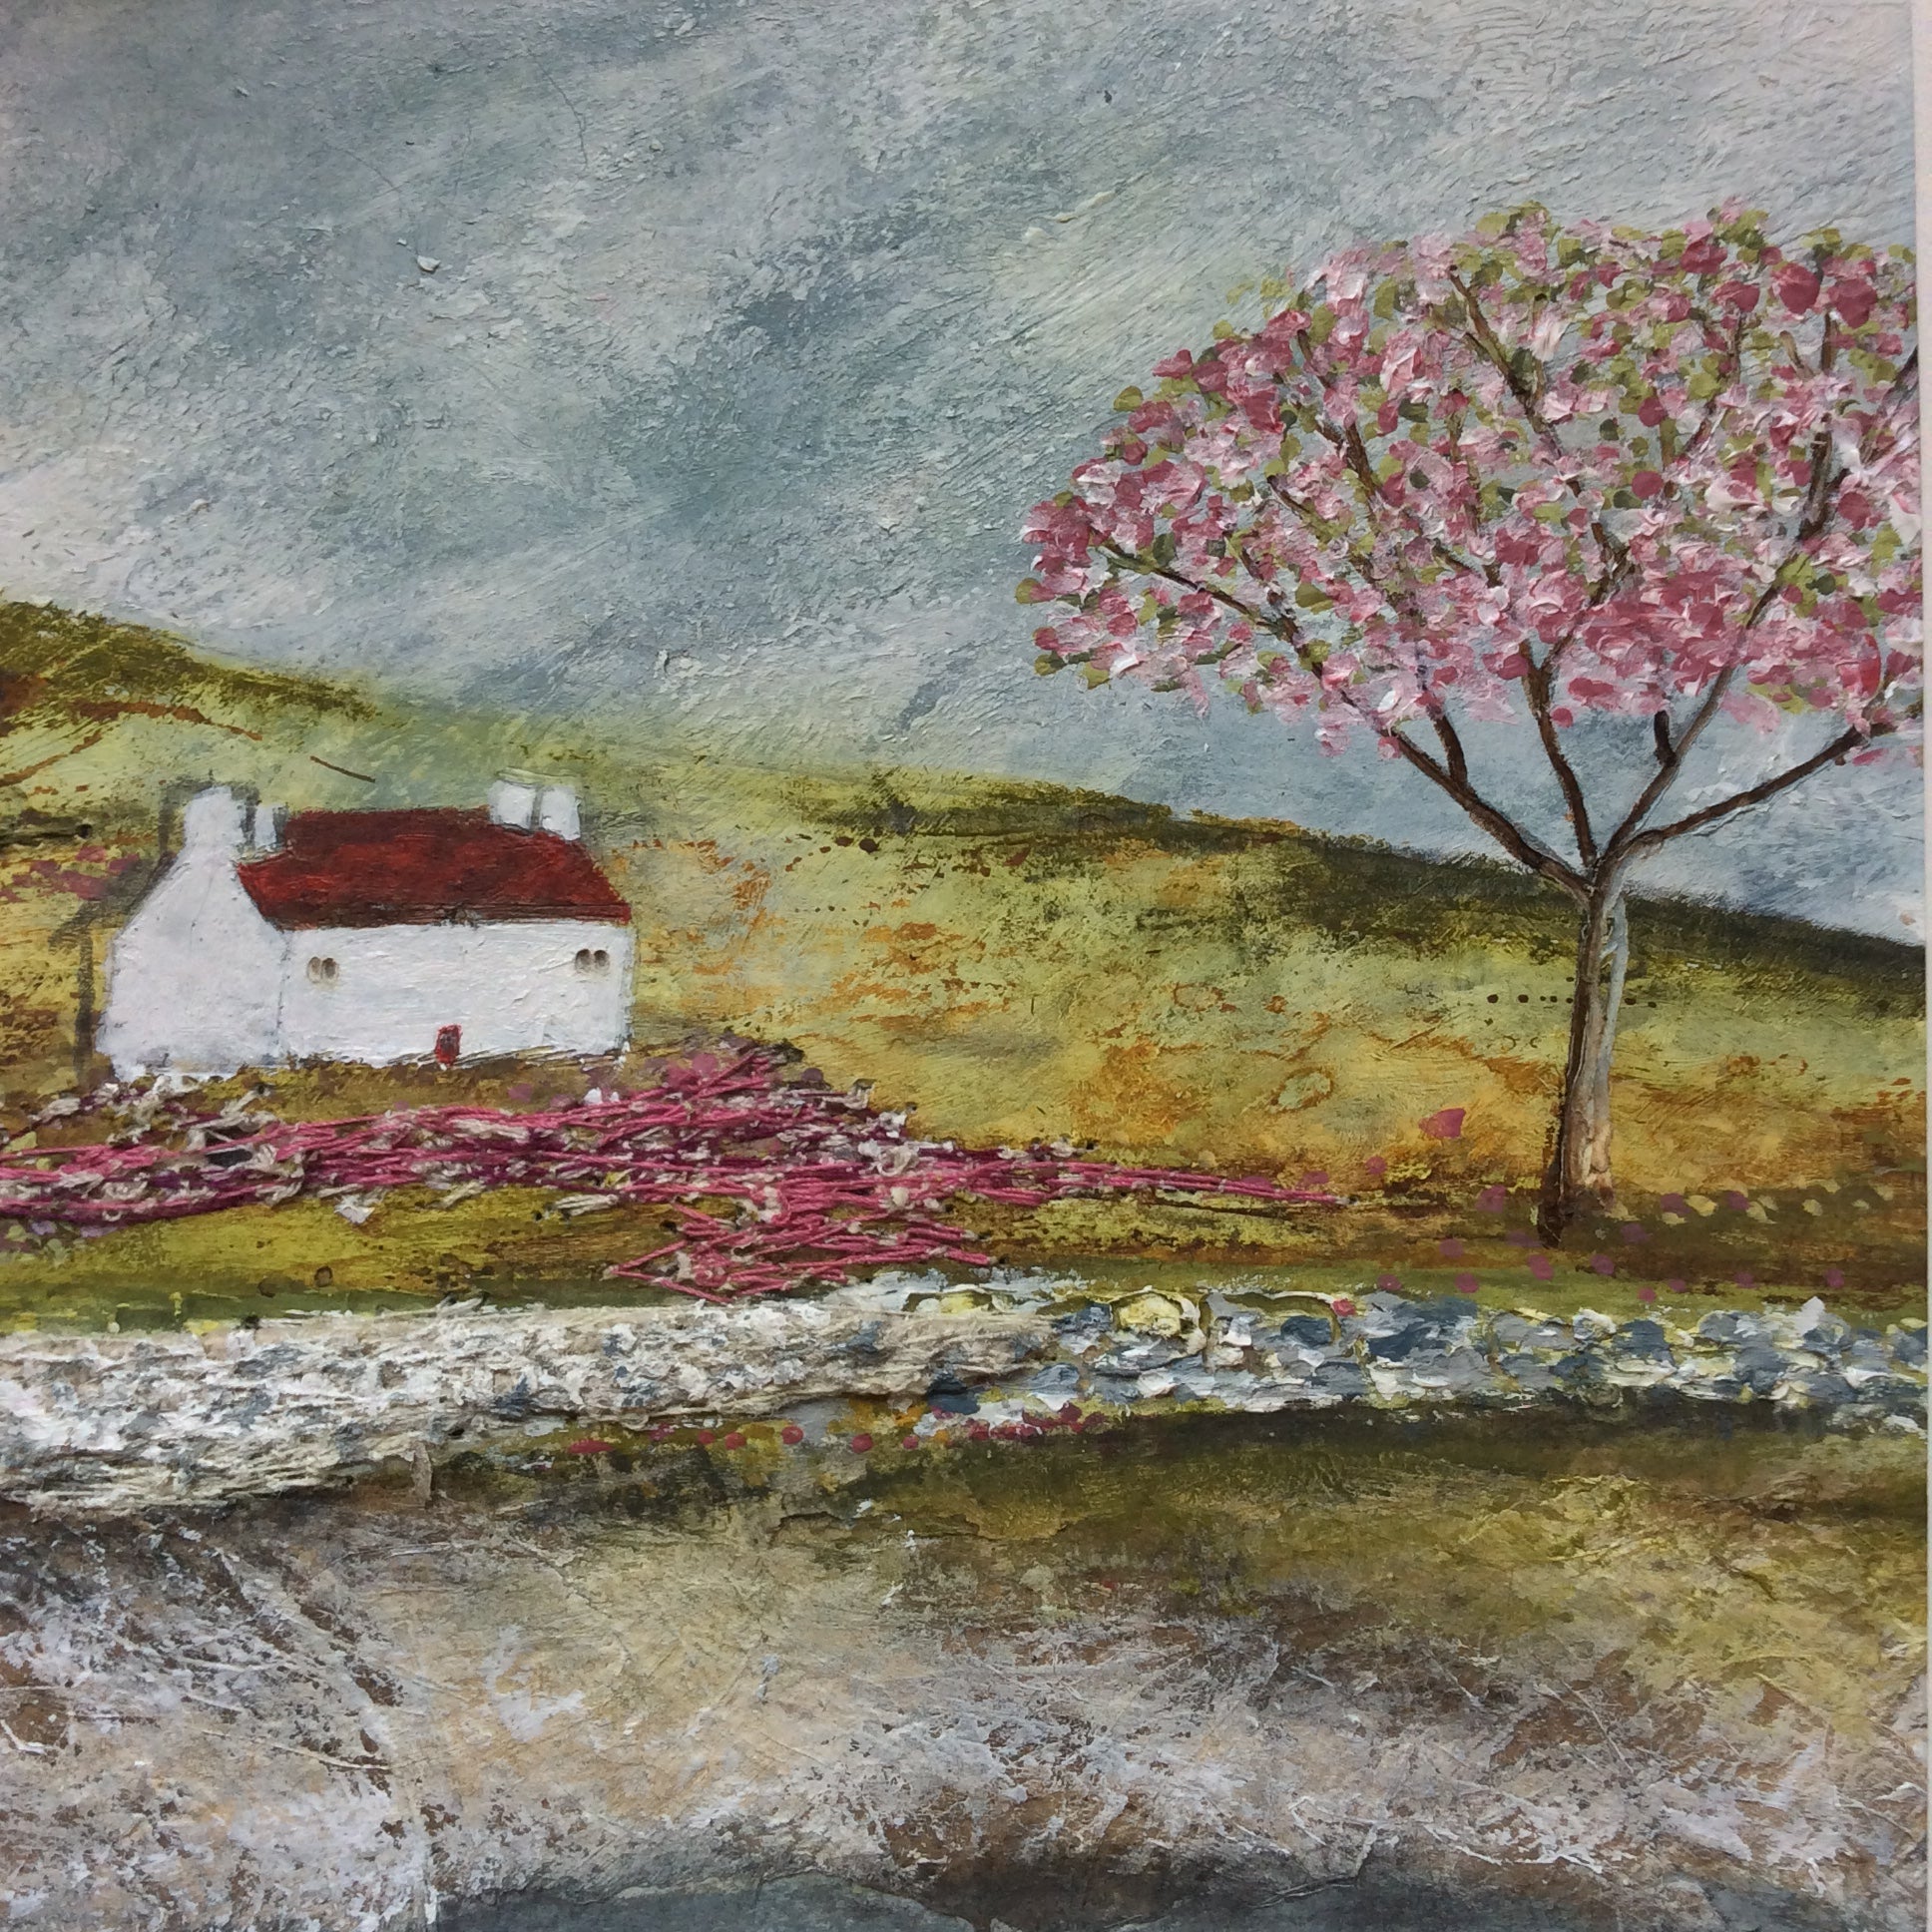 Mixed Media Art By Louise O'Hara “A blossom tree by the lake”